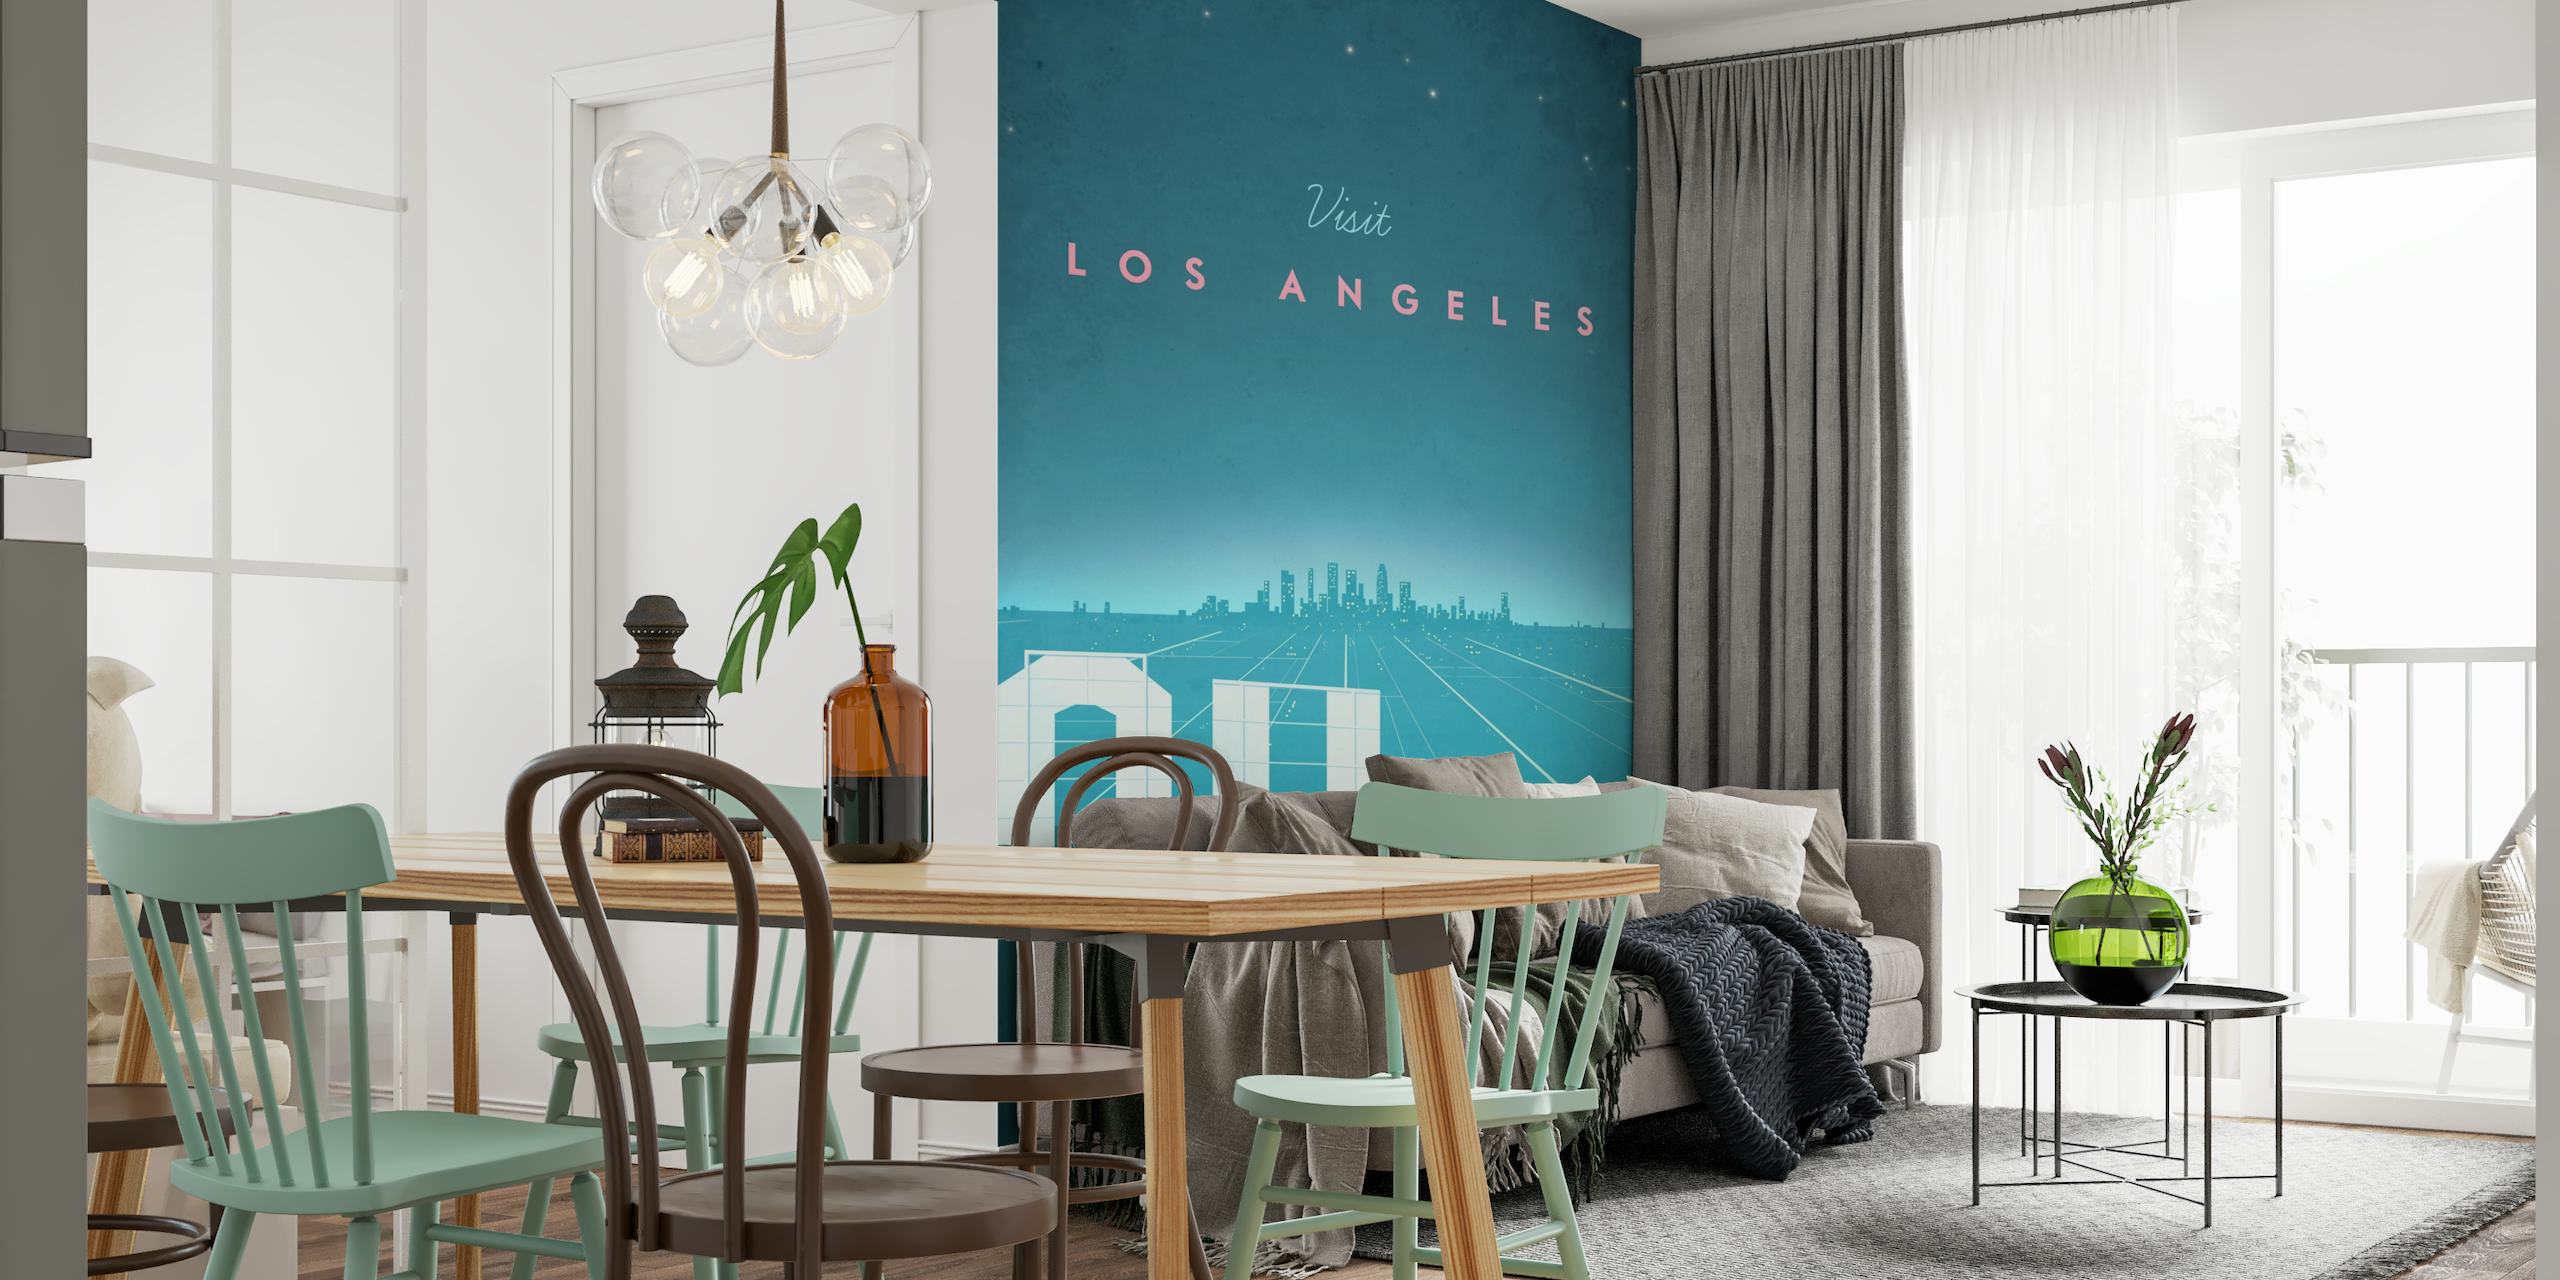 Los Angeles Travel Poster papel pintado